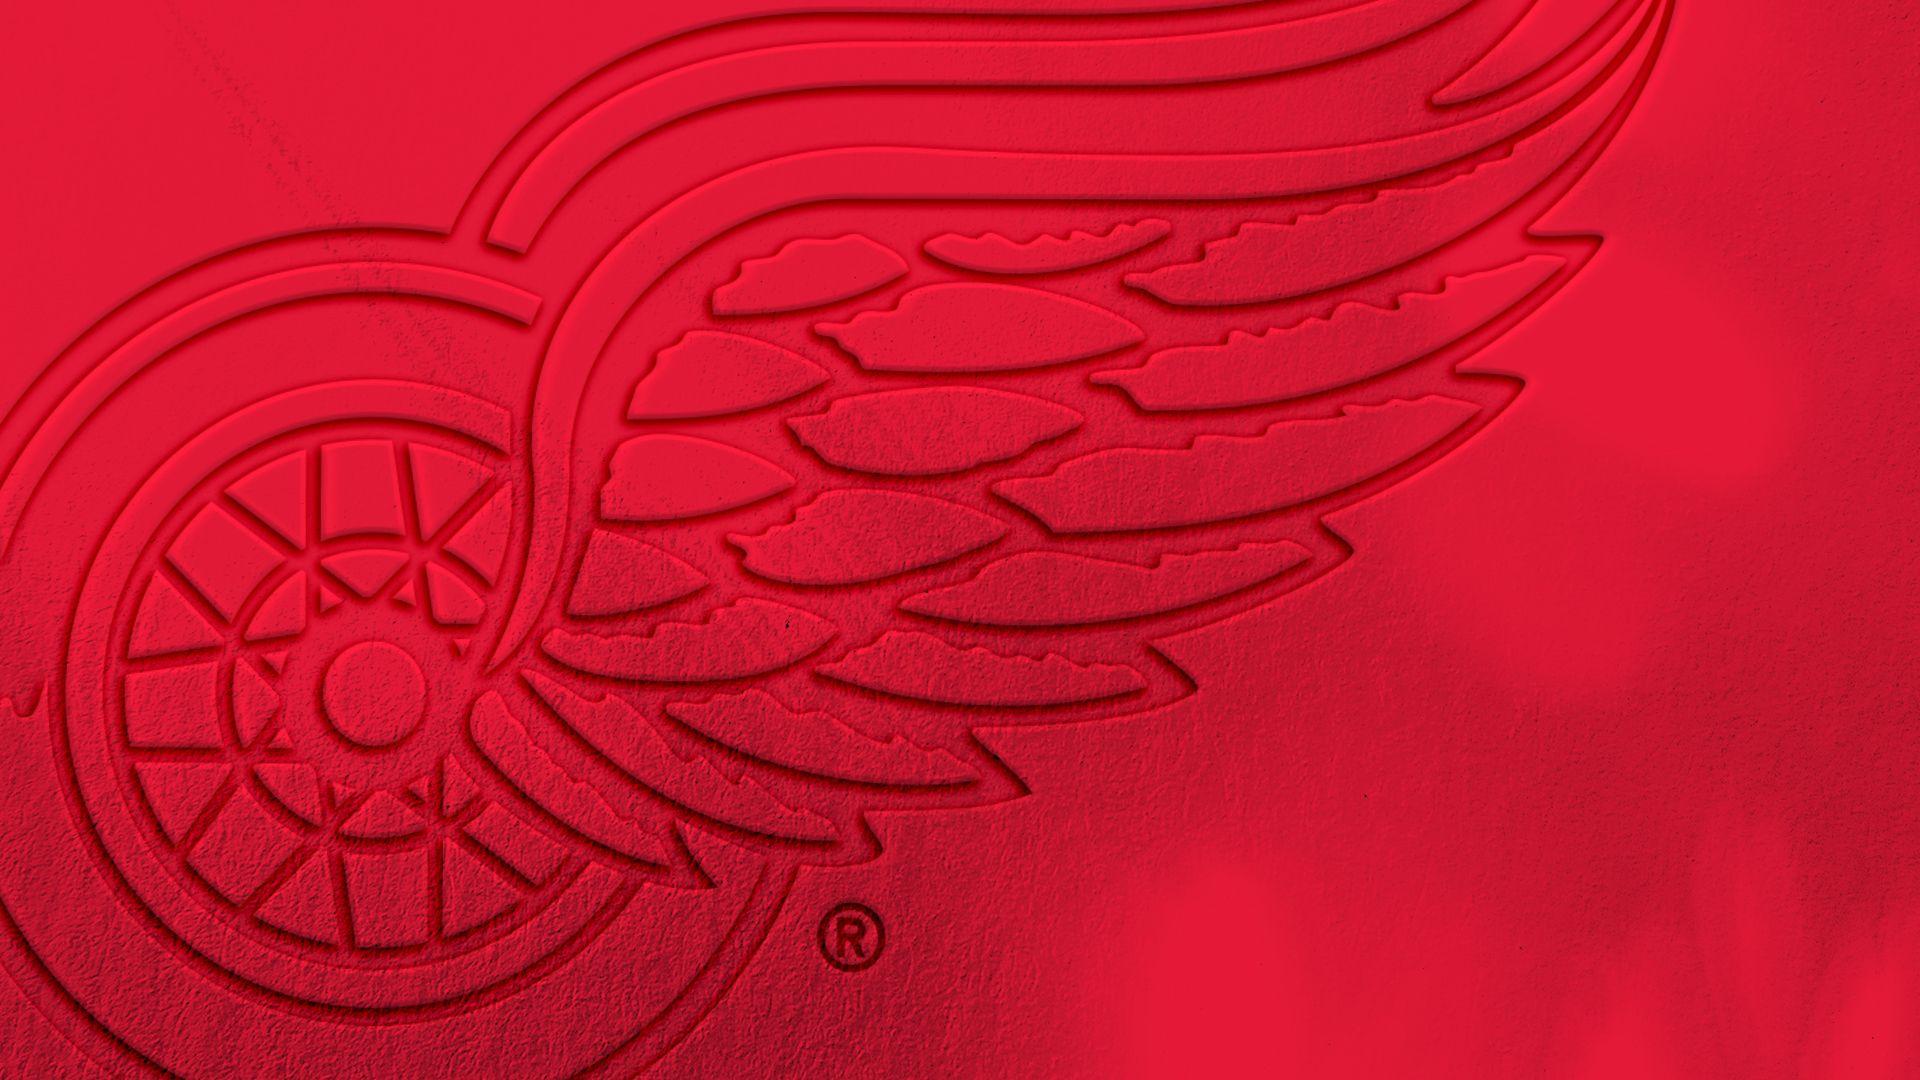 Detroit Red Wings Wallpaper 33771 - Baltana